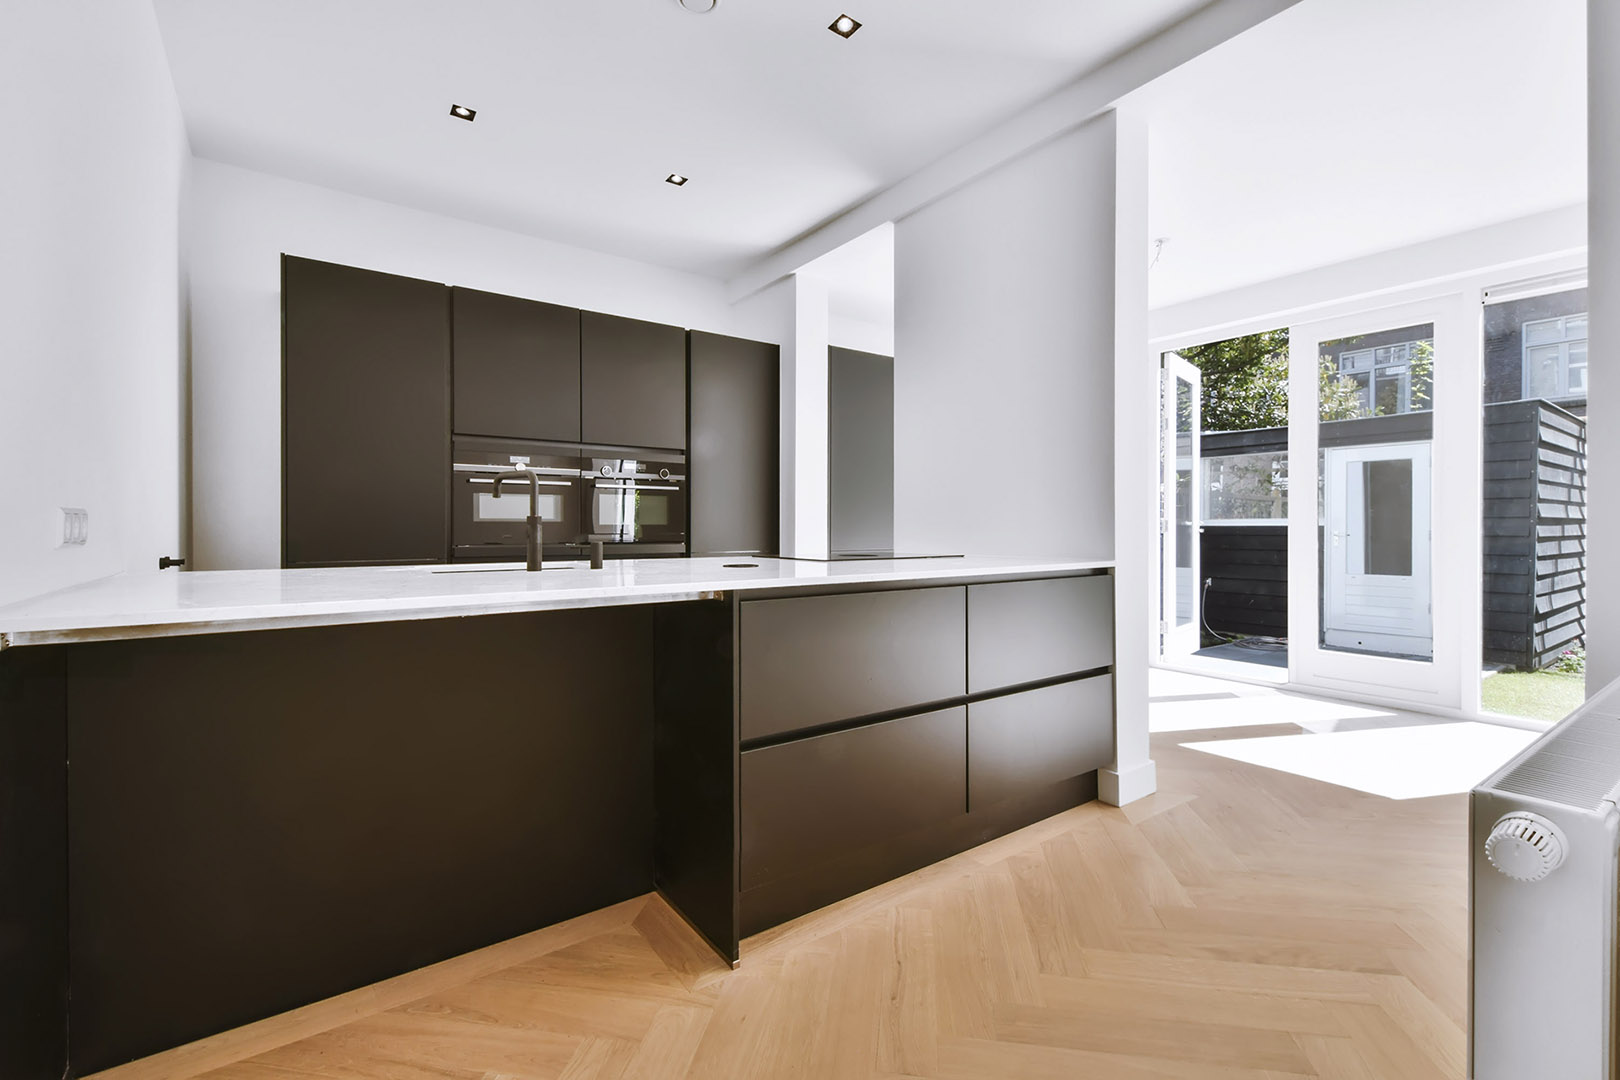 stylish-kitchen-in-daylight-with-a-black-kitchen-s-2022-03-03-00-14-44-utc.jpg